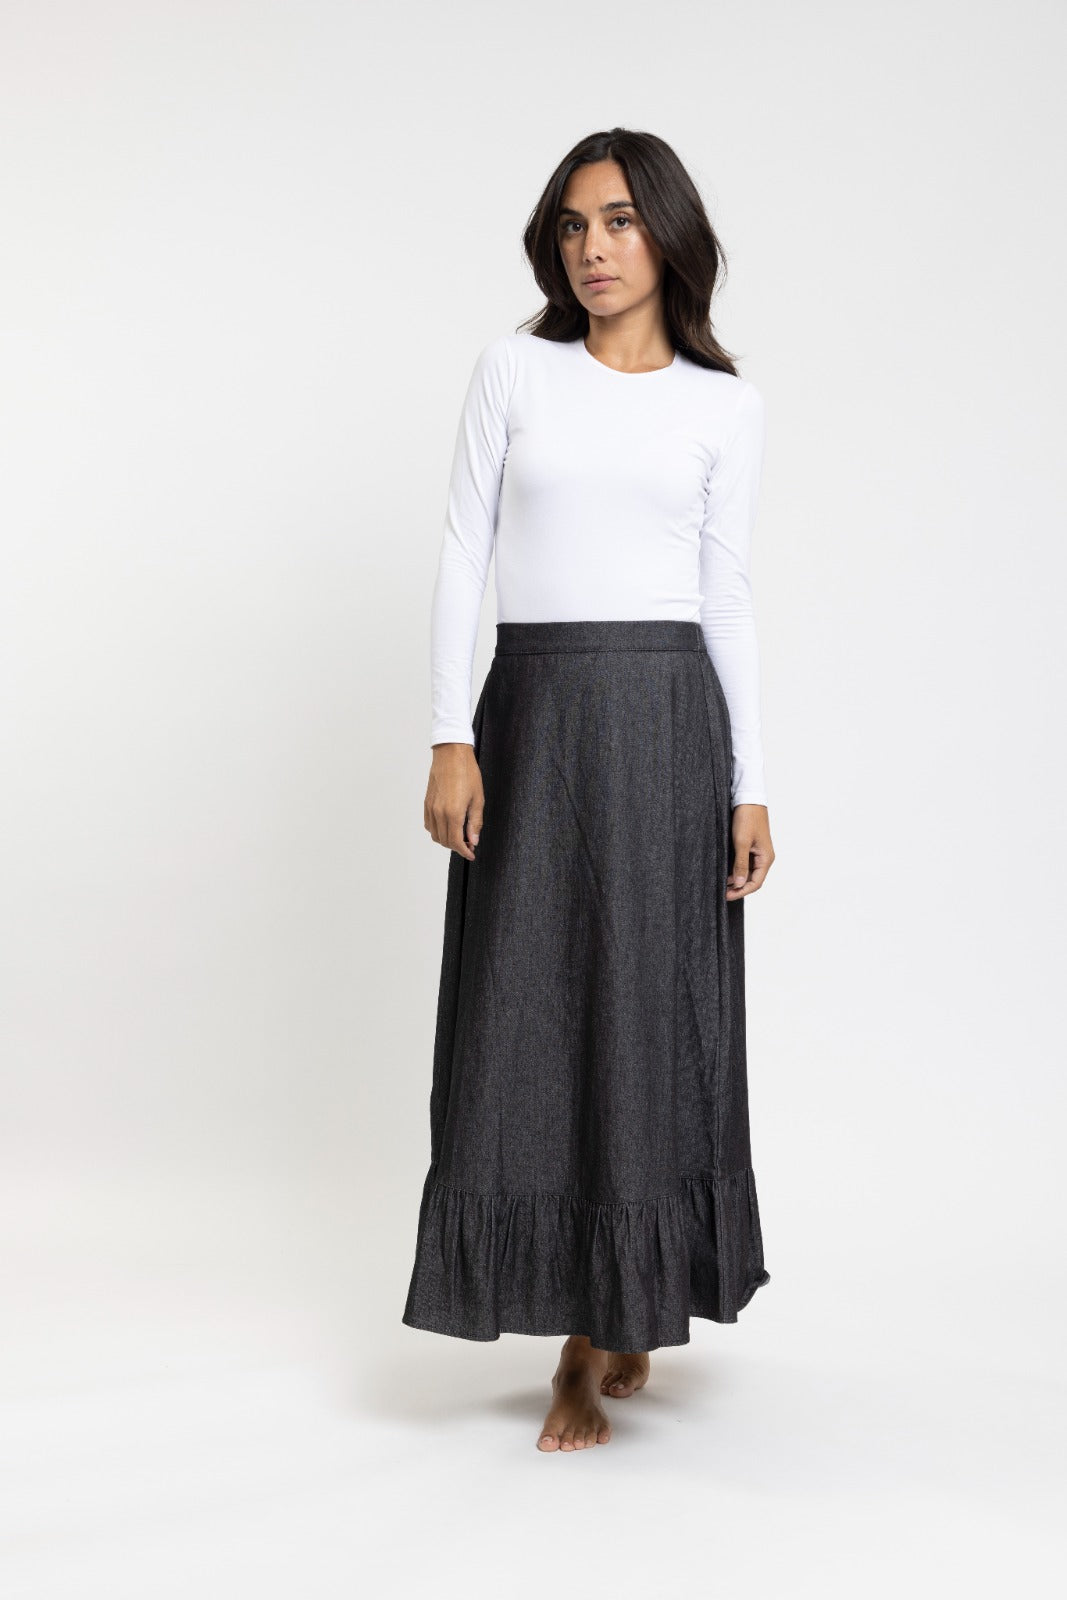 Mila Blk Cotton Denim Skirt TNS23522-B